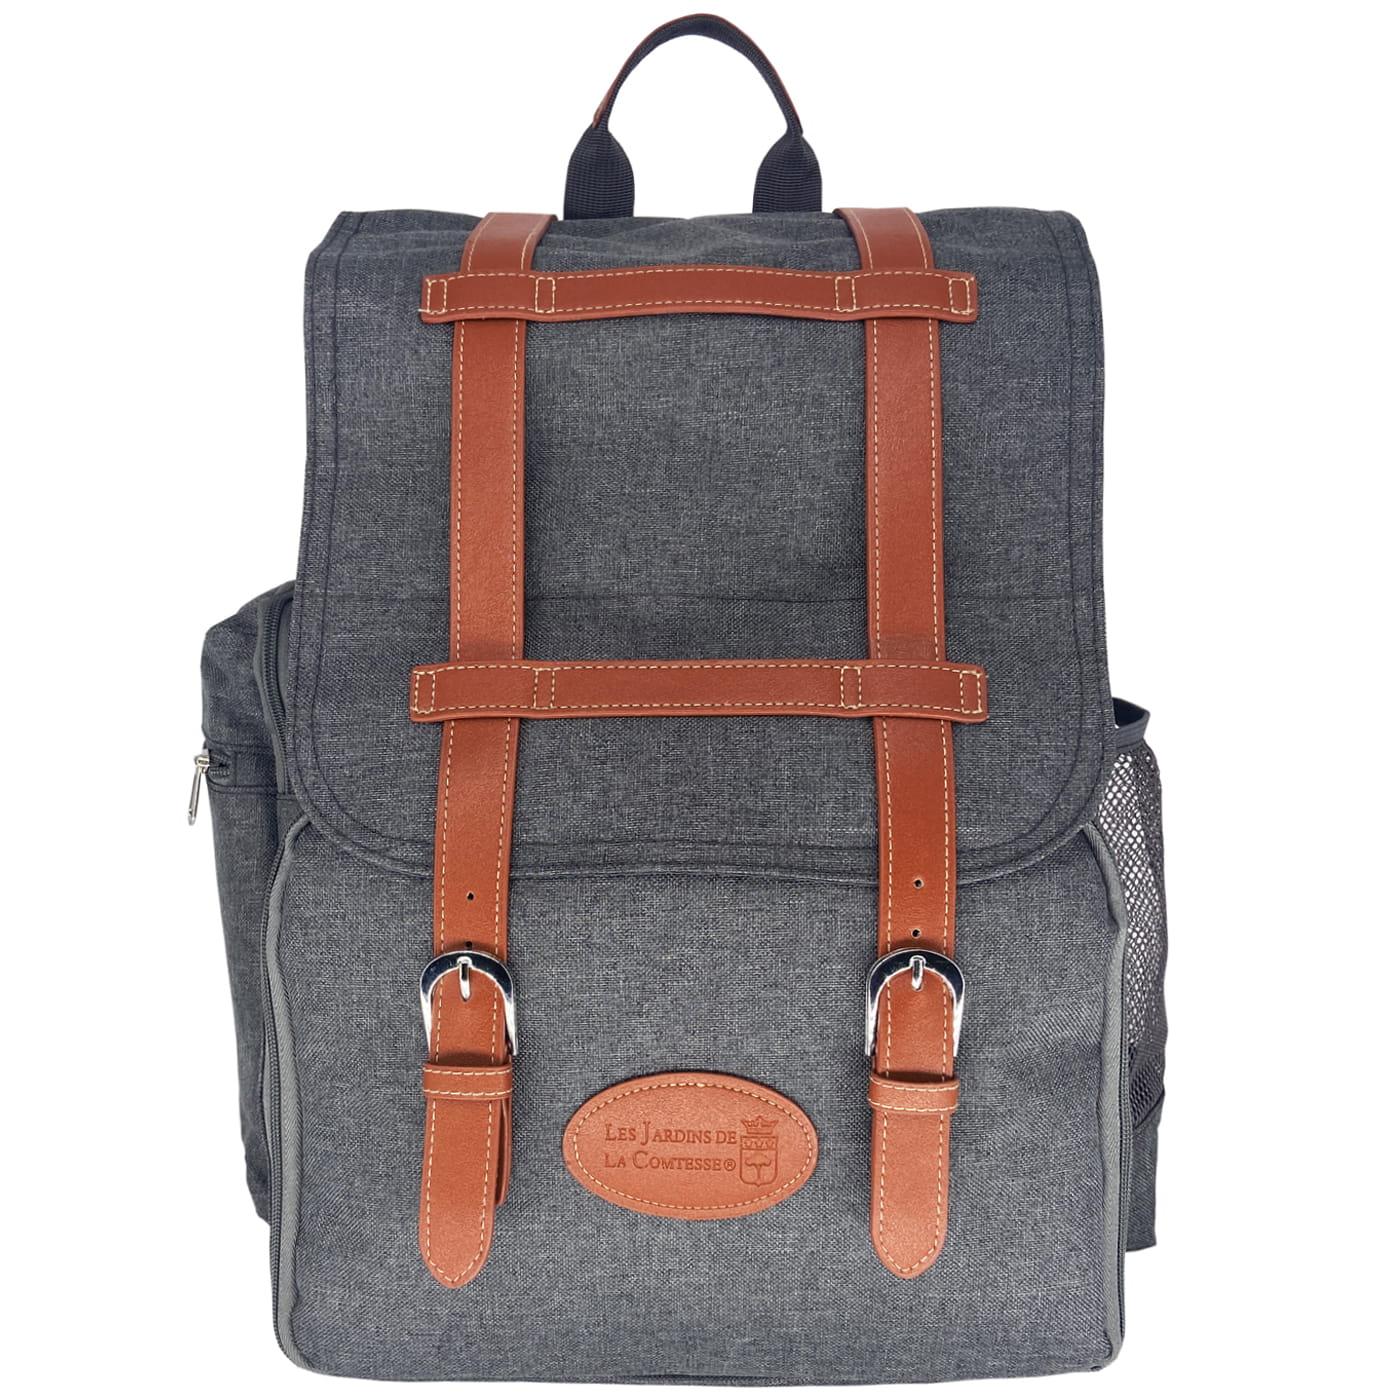 Picnic backpack "Escapade" Grey - 4 persons